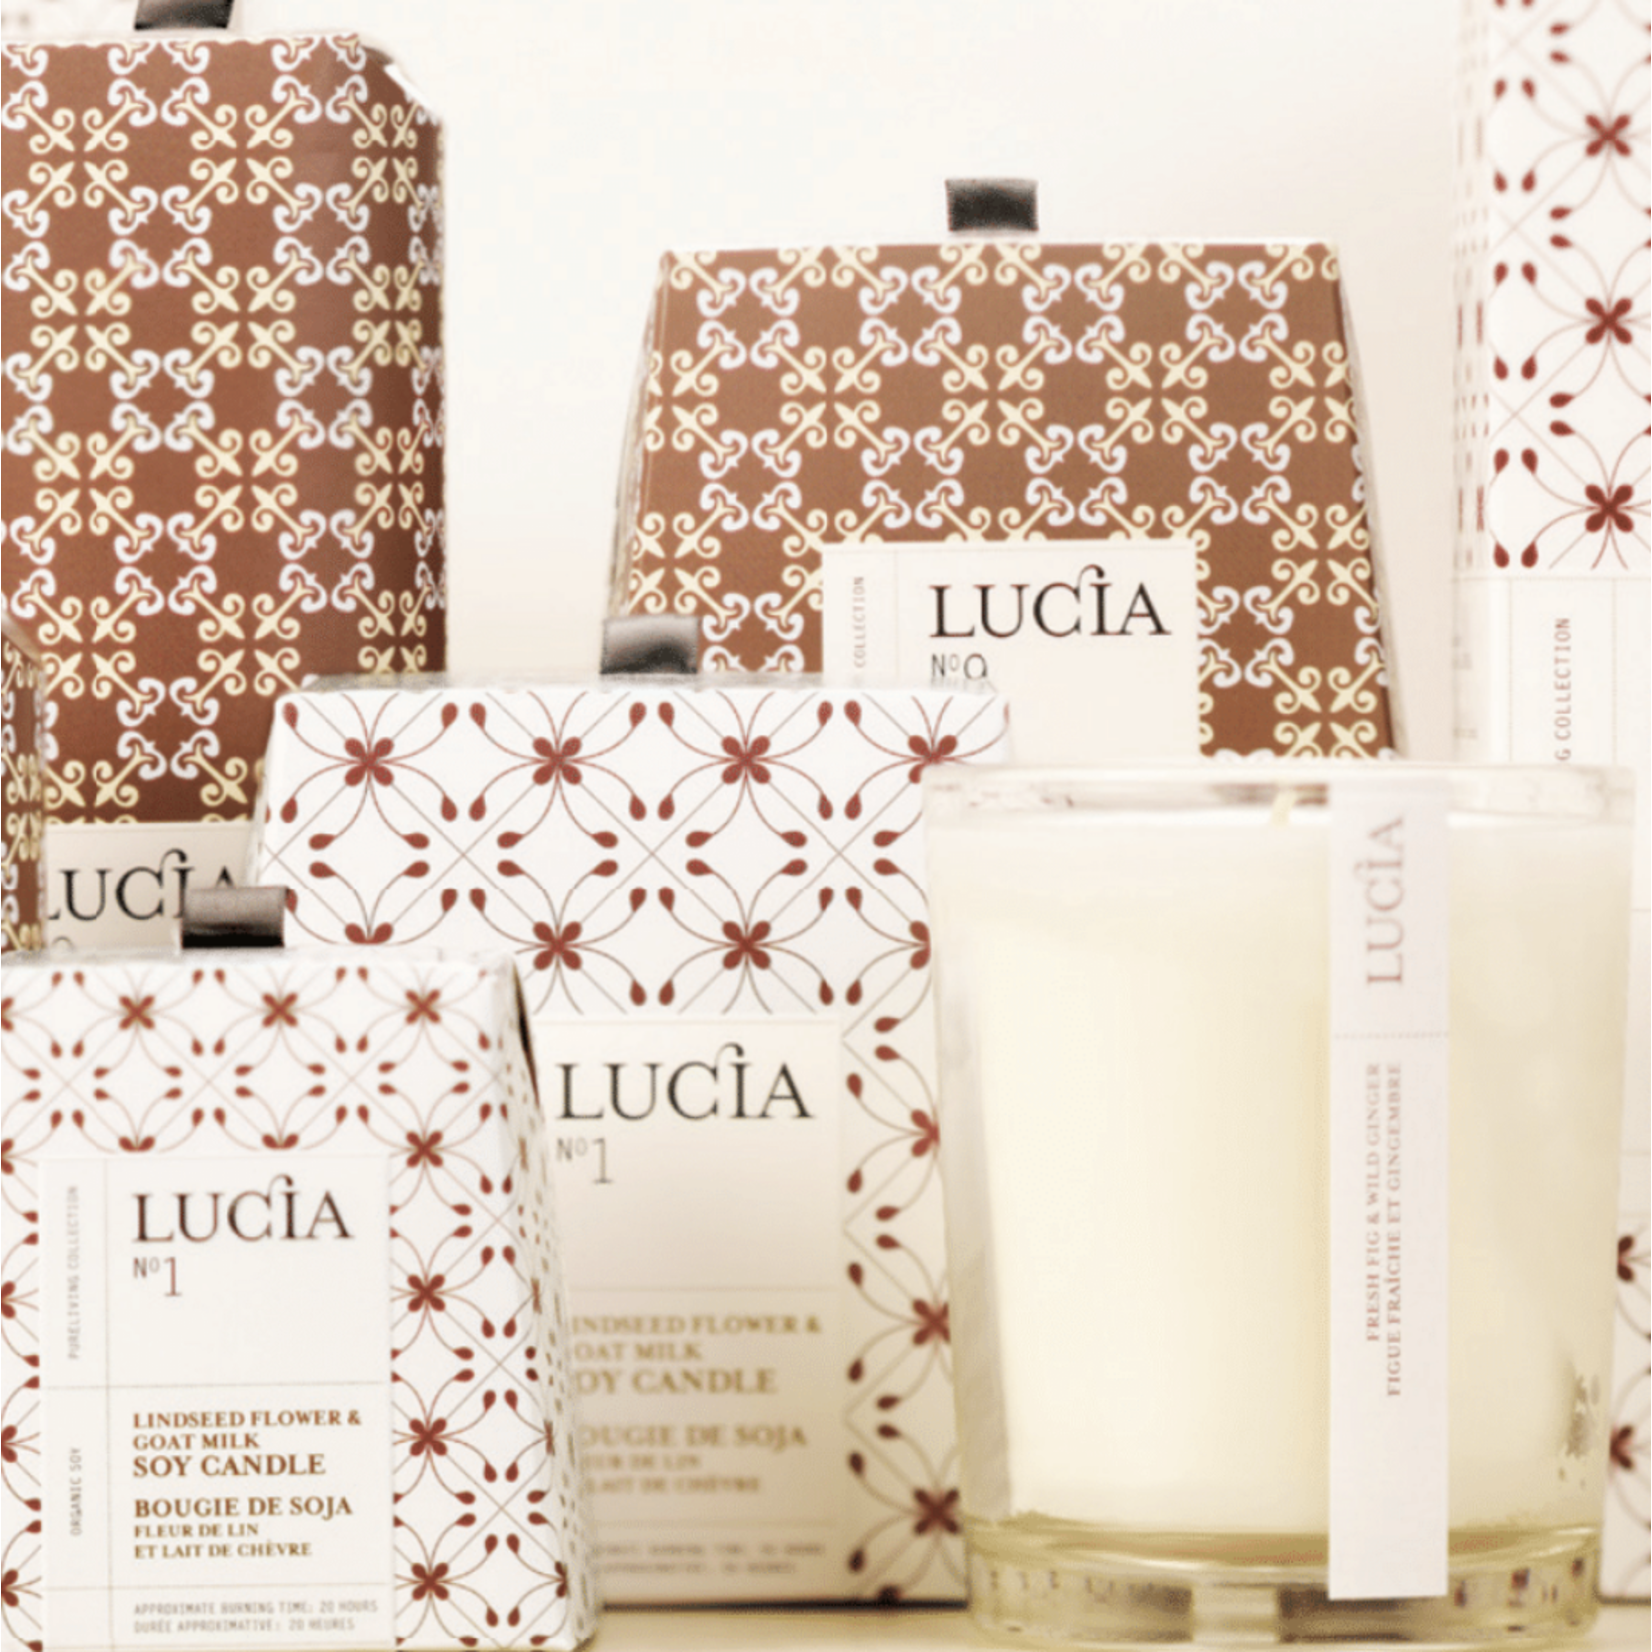 Lucia Lucia Candles